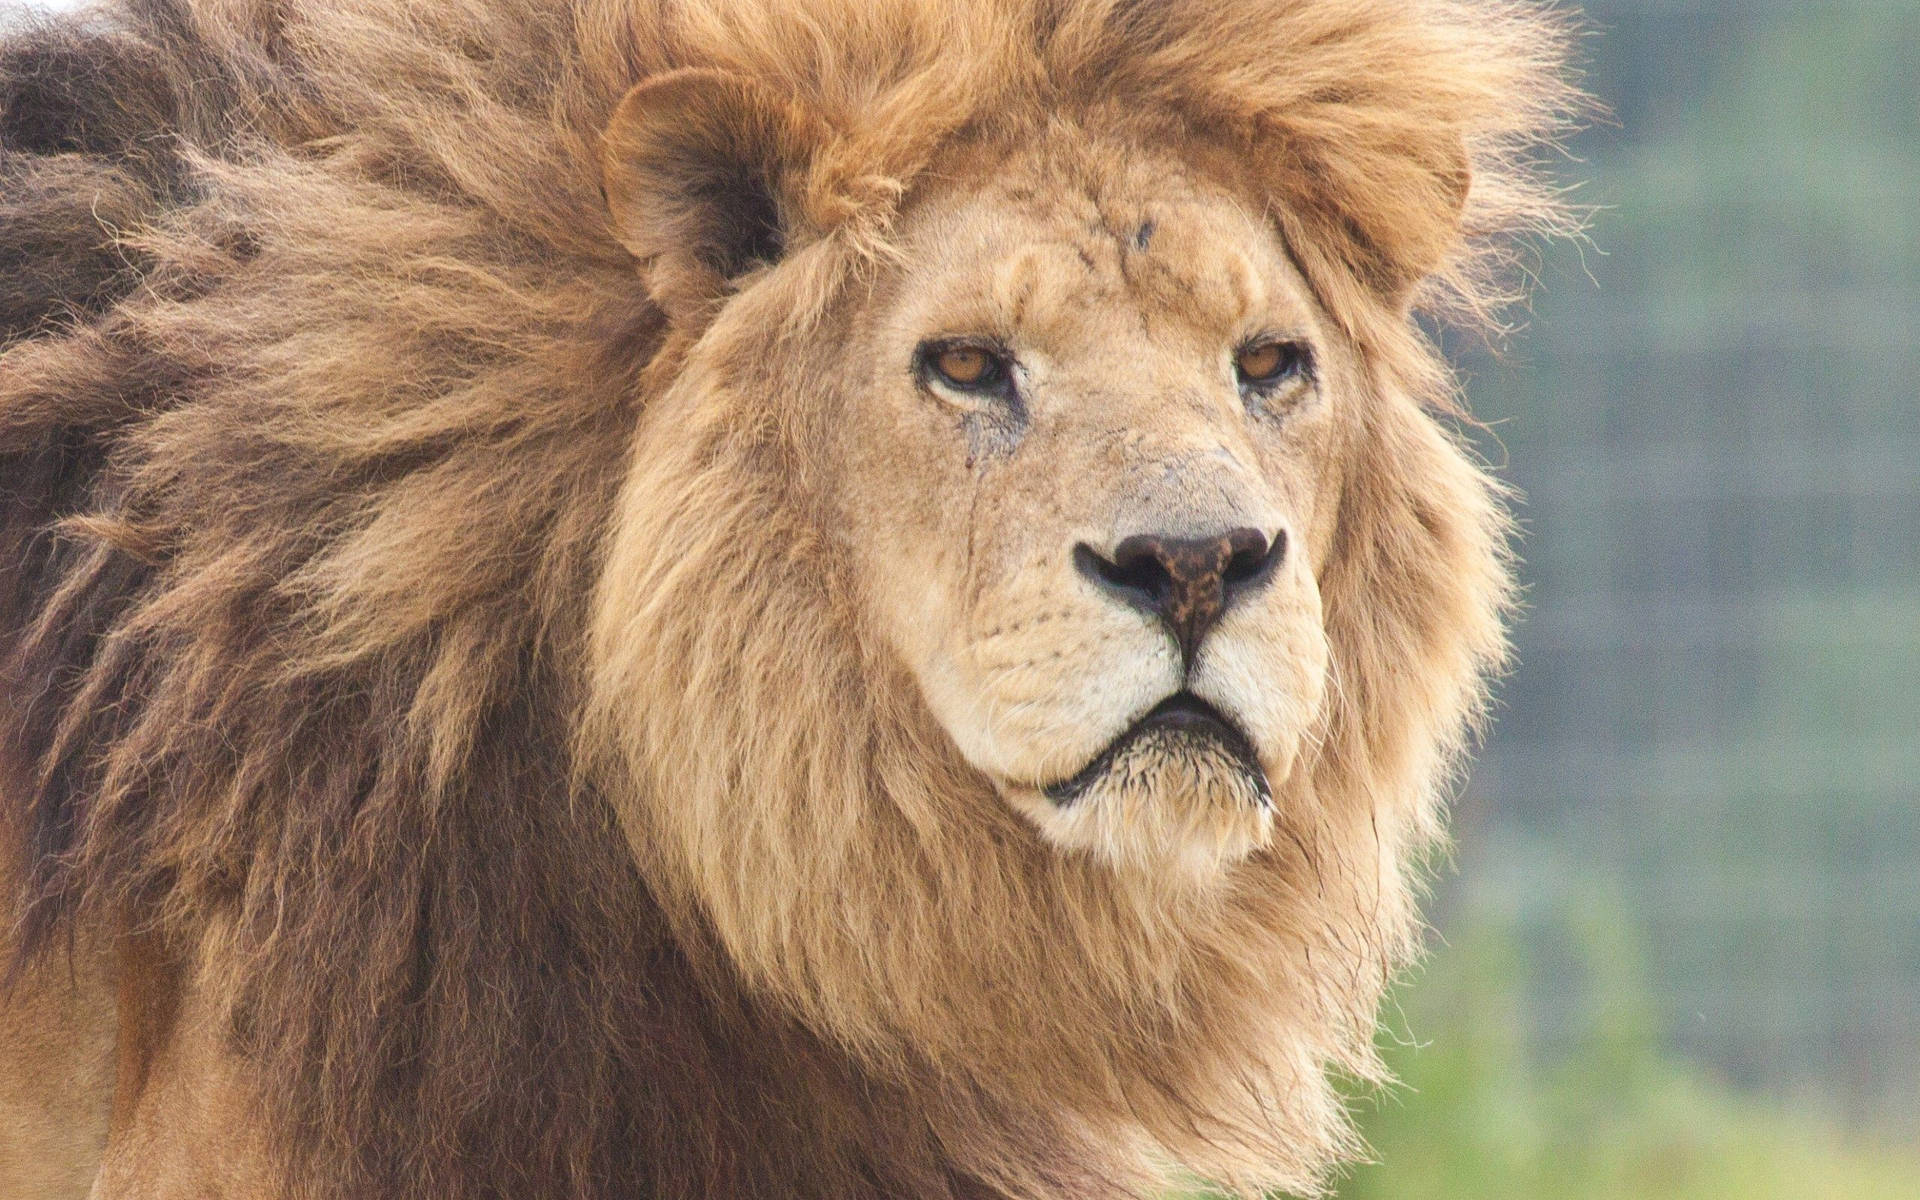 An angry Predator Lion stares Wallpaper